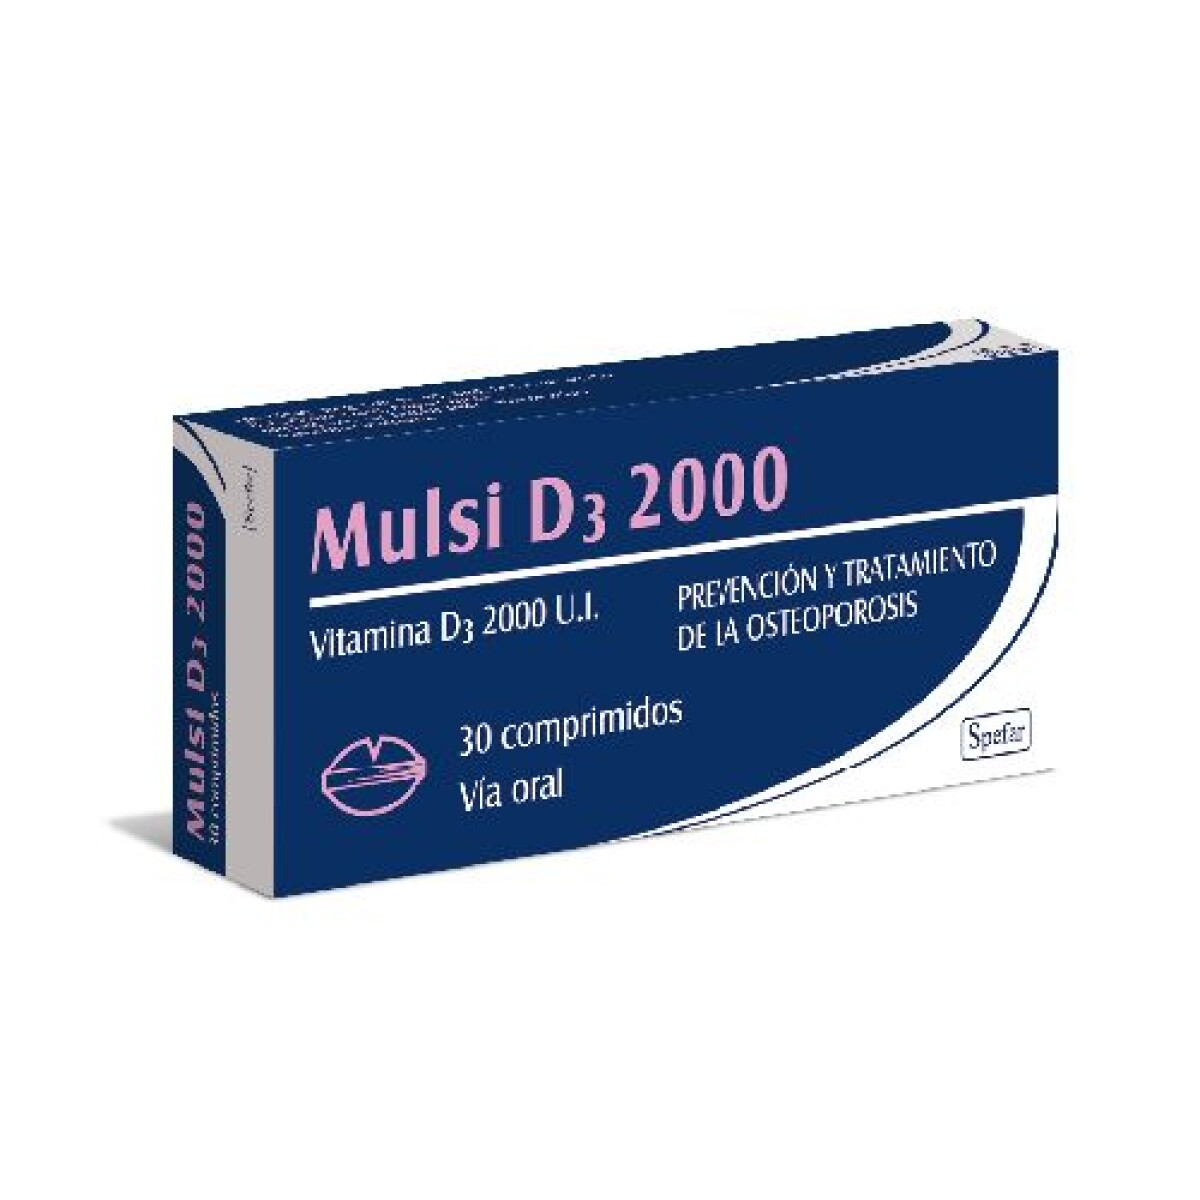 Mulsi D3 2000 